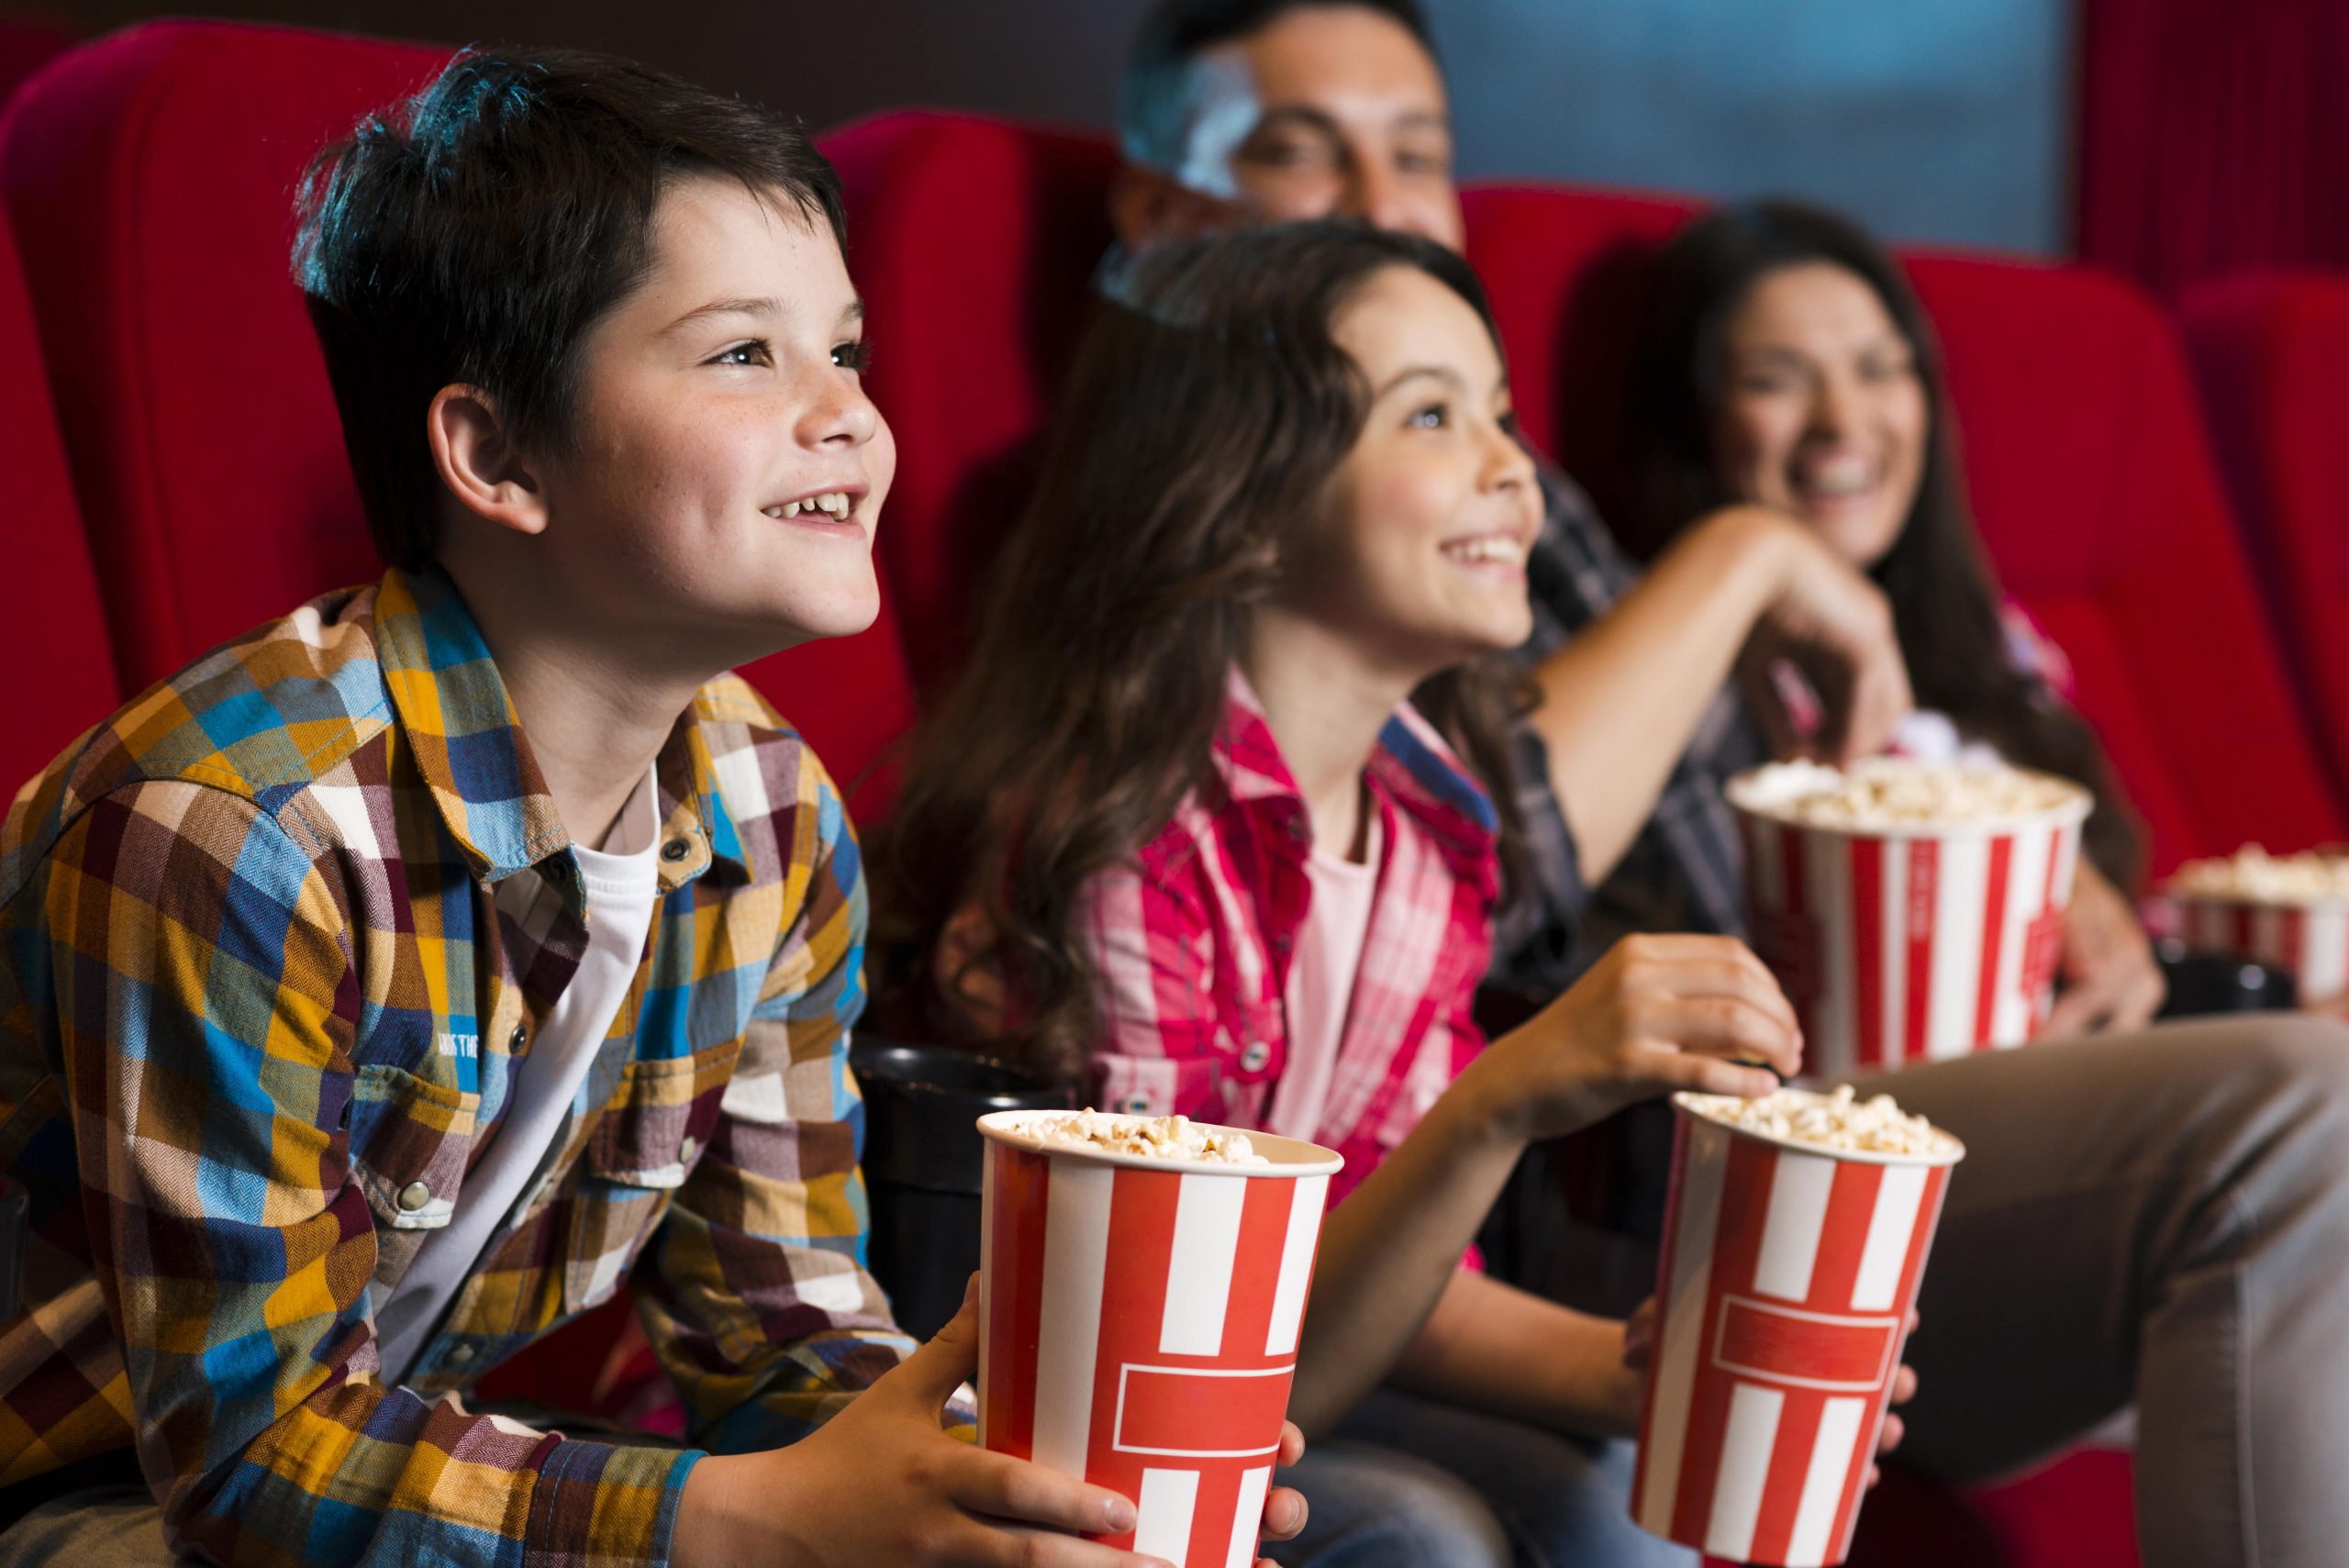 We can go to the cinema. Дети в кинотеатре. Дети в кинотеатре с попкорном. Поход в кинотеатр. Подростки в кинотеатре с попкорном.